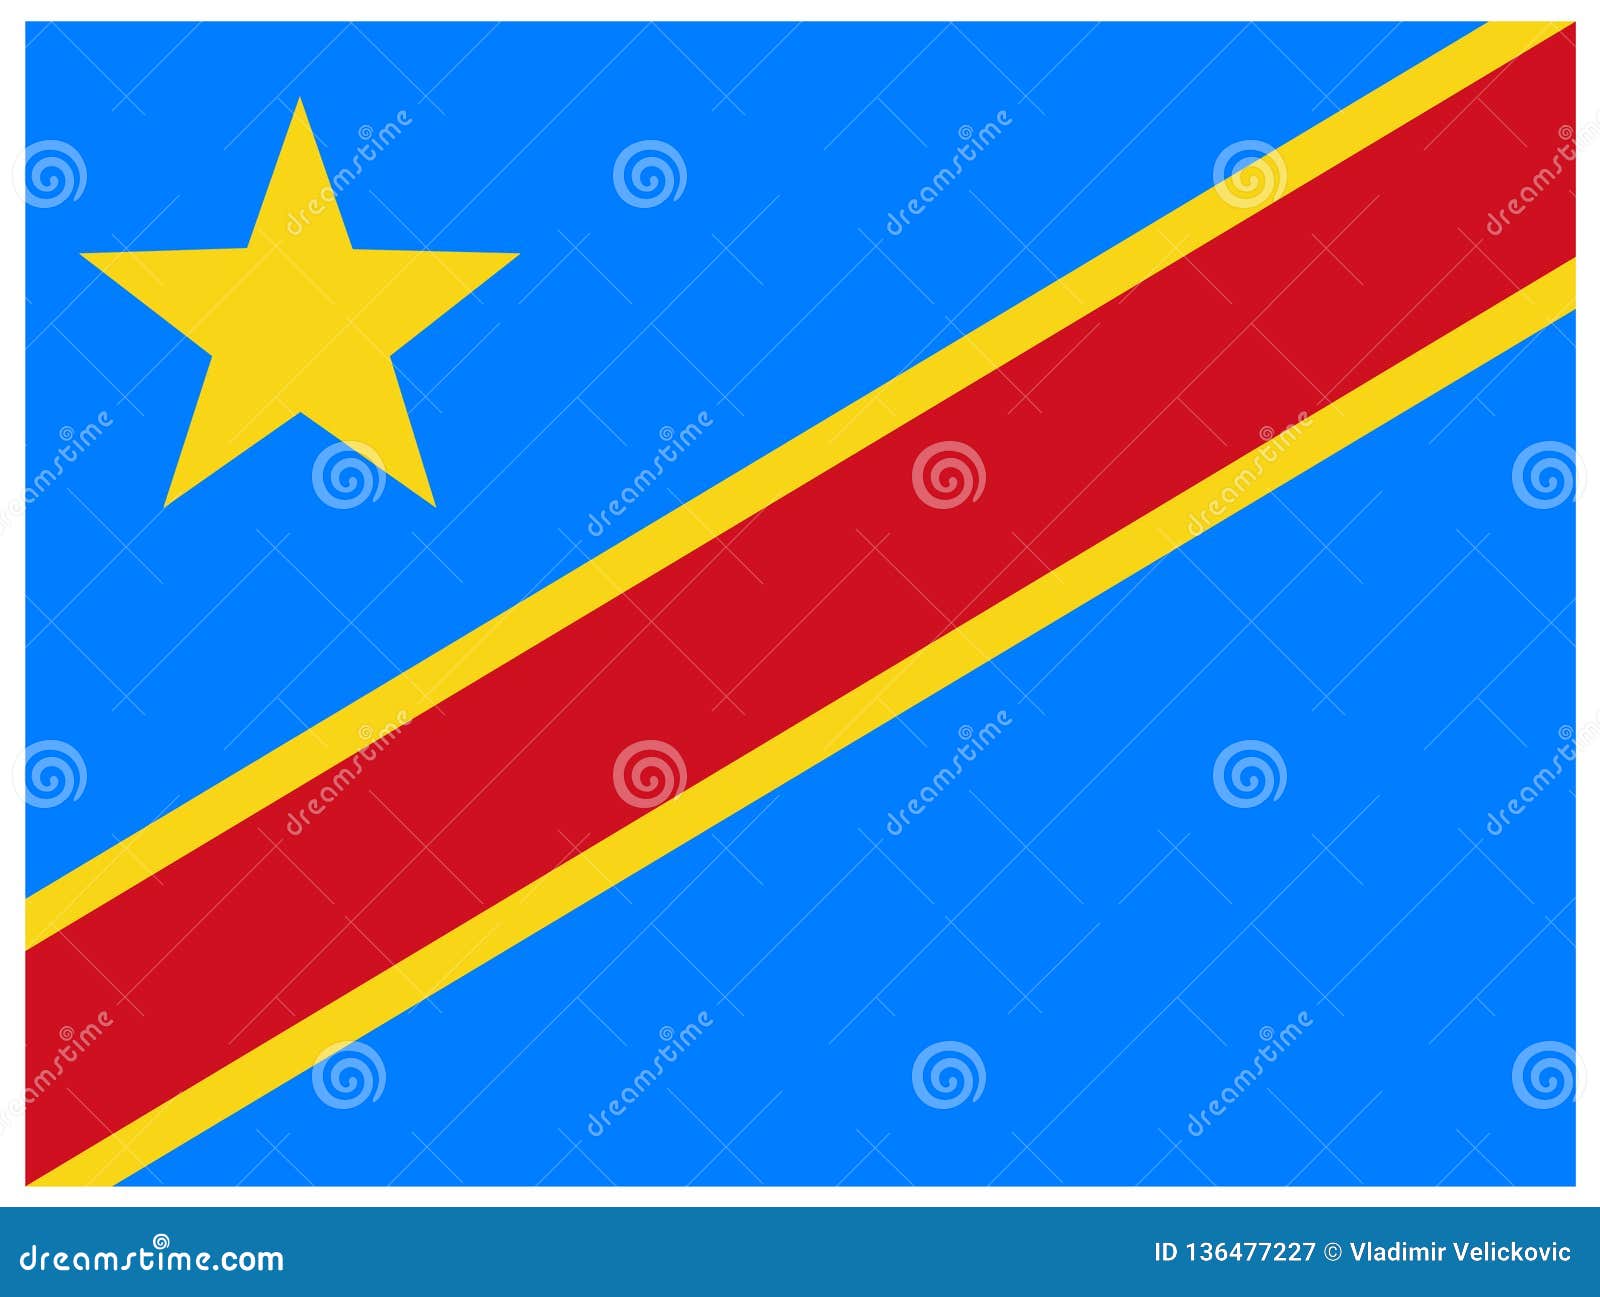 democratic republic of the congo or dr congo flag